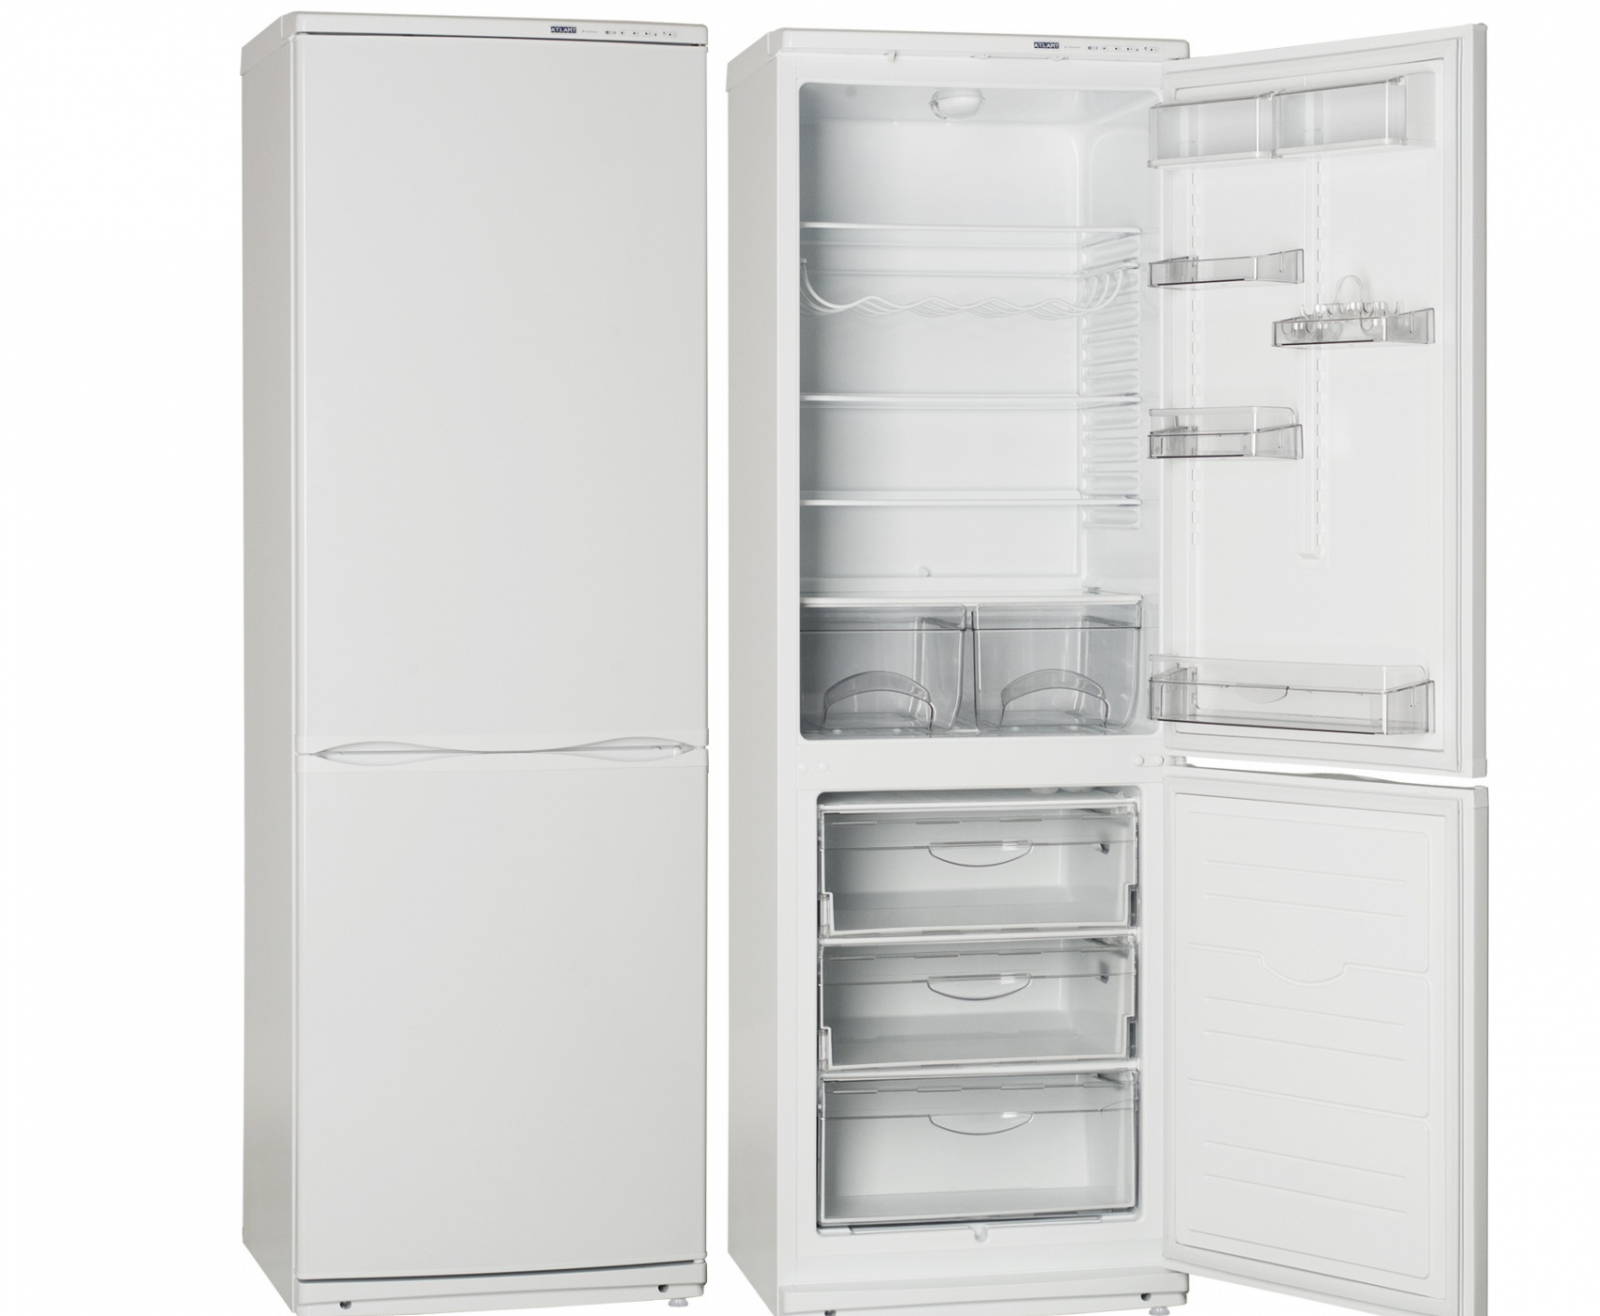 холодильник atlant xm 6021-031, купить в Красноярске холодильник atlant xm 6021-031,  купить в Красноярске дешево холодильник atlant xm 6021-031, купить в Красноярске минимальной цене холодильник atlant xm 6021-031